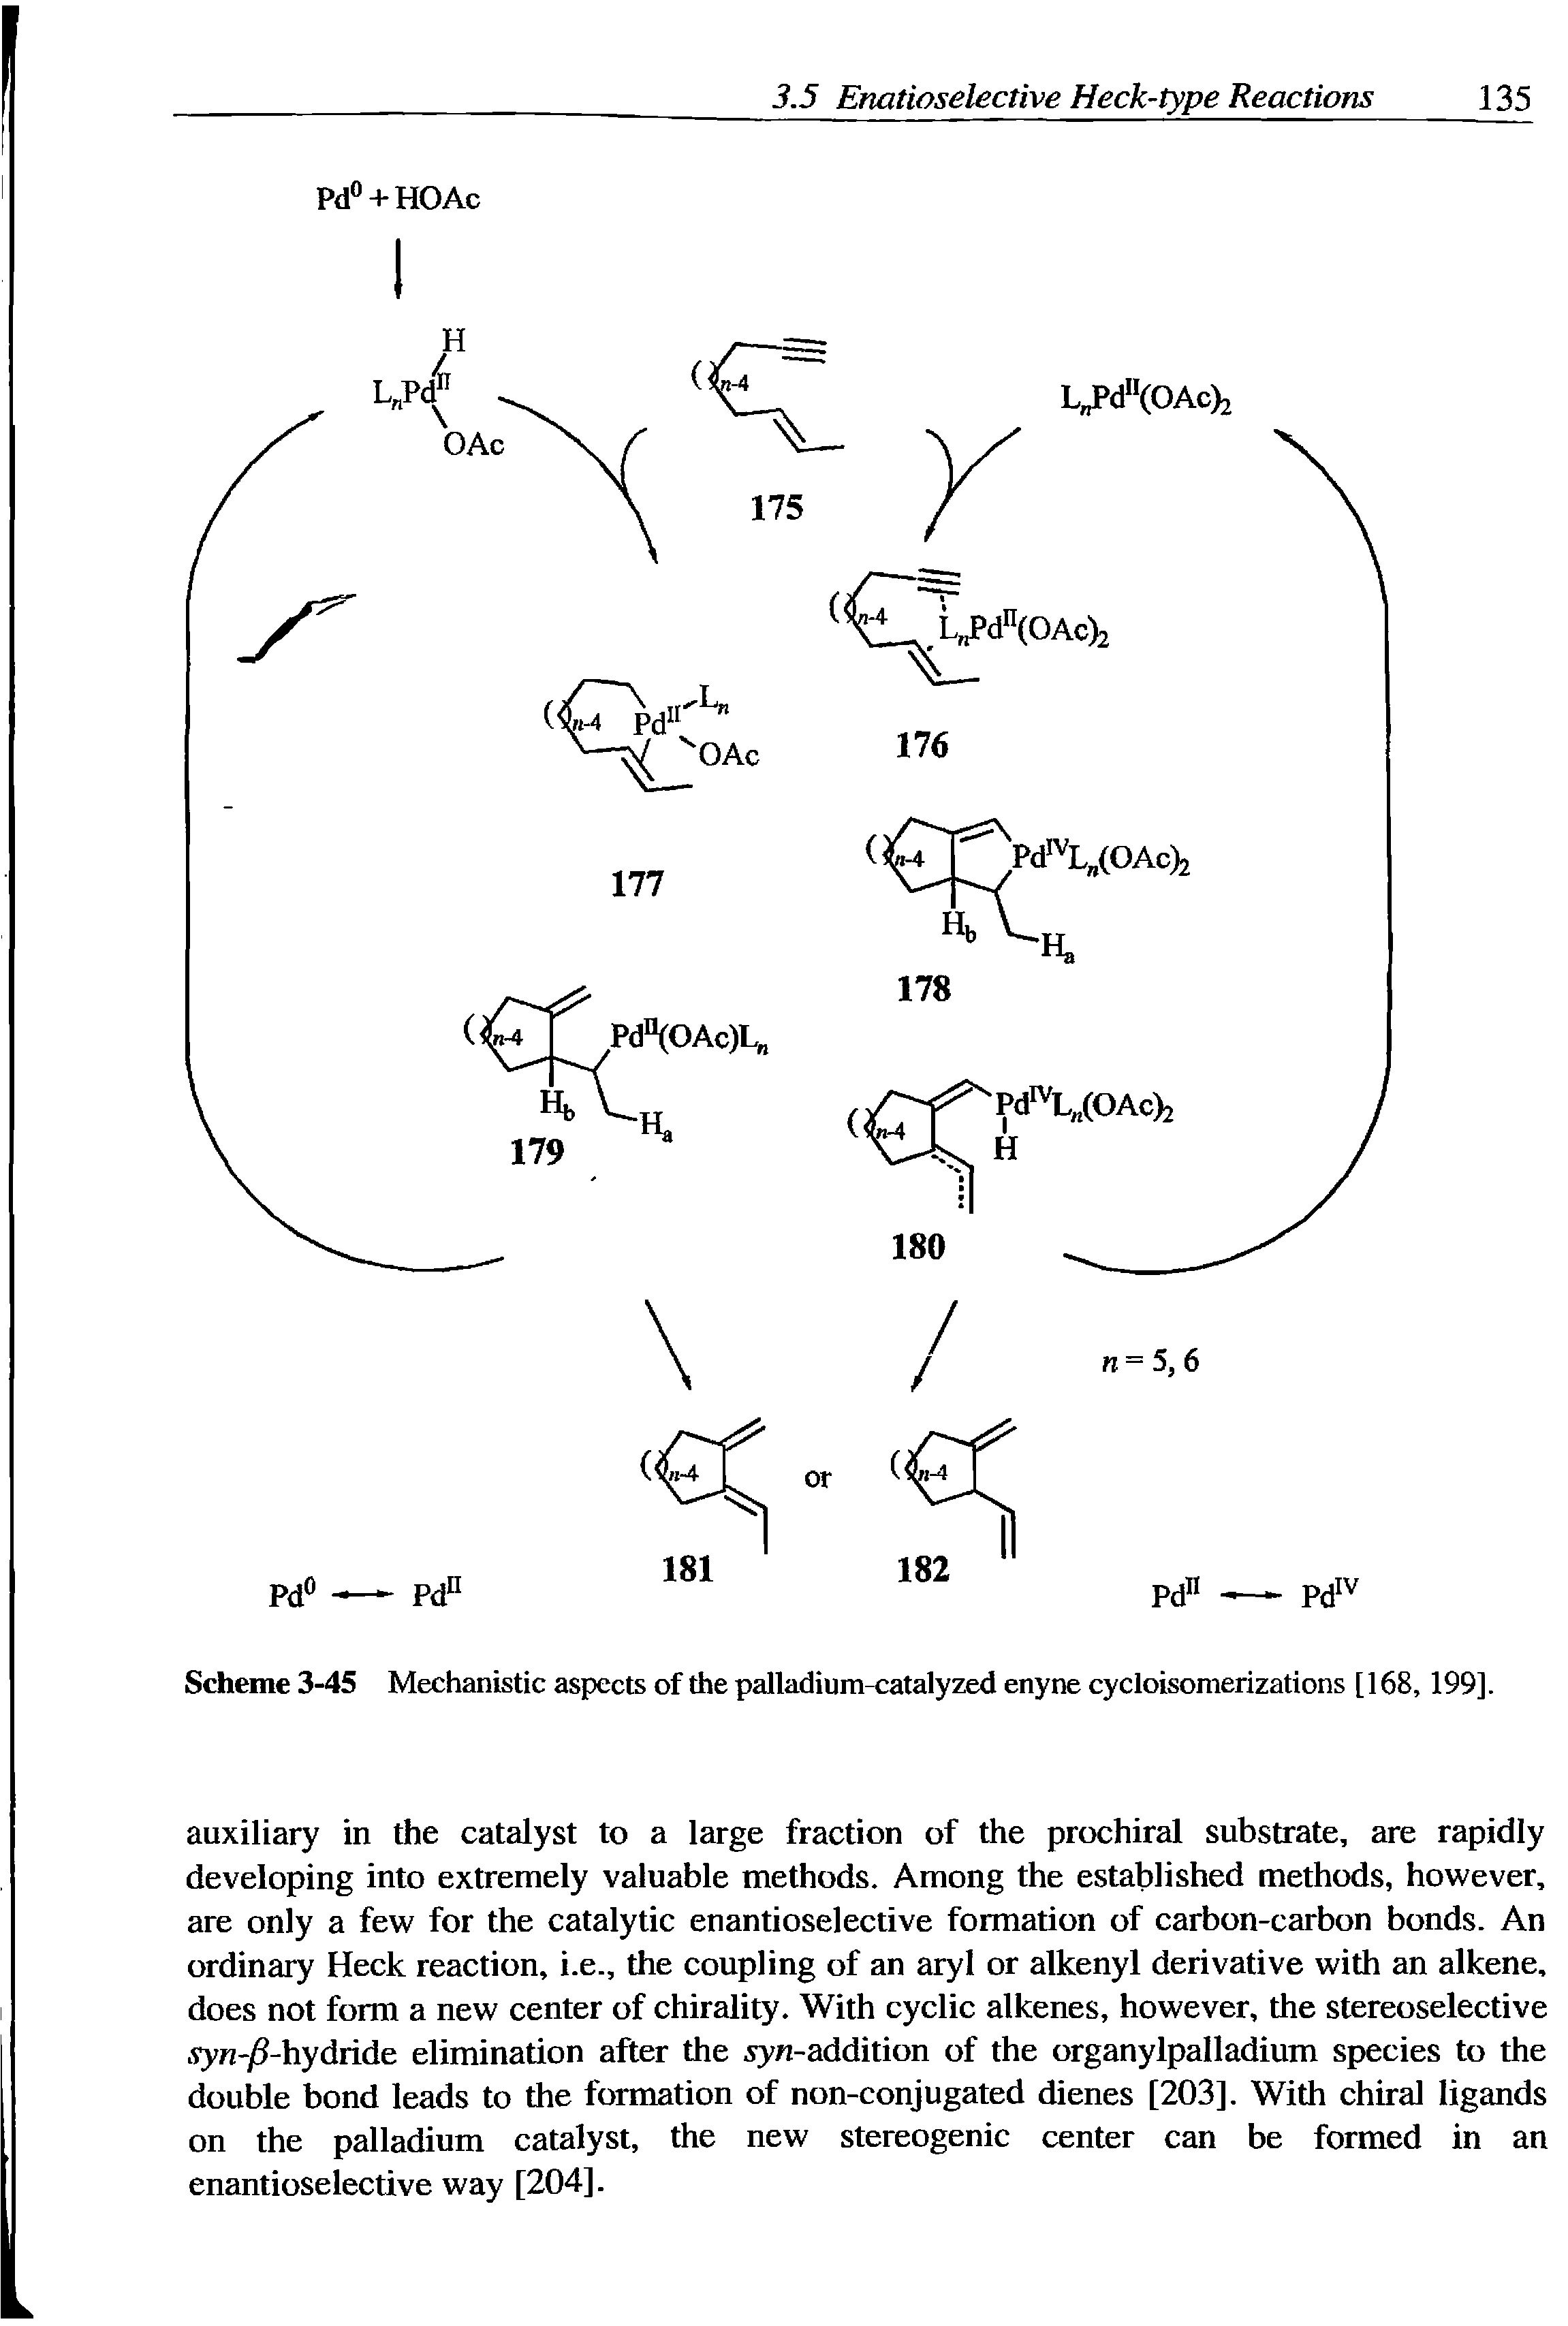 Scheme 3-45 Mechanistic aspects of the palladium-catalyzed enyne cycloisomerizations [168, 199].